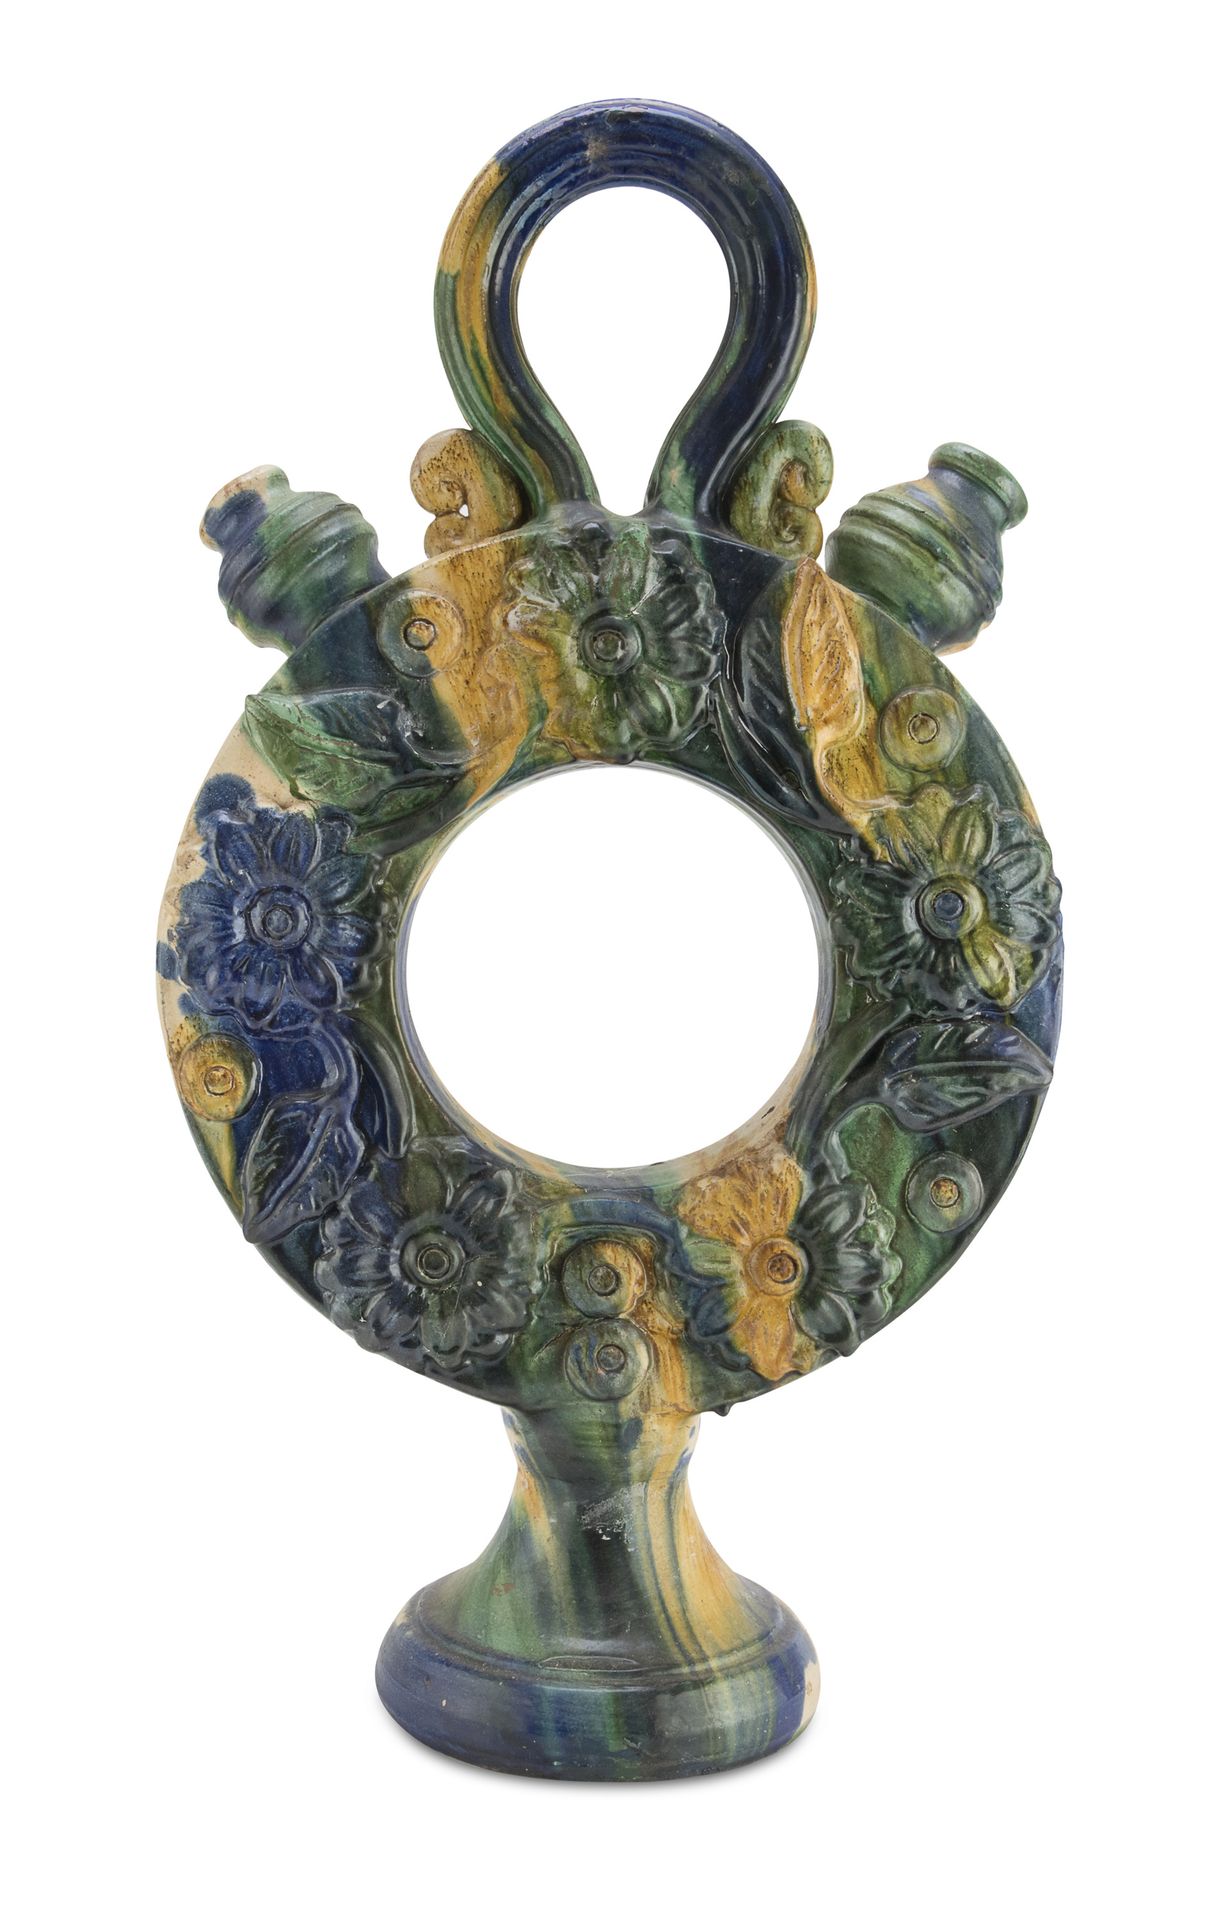 Null 陶器甜甜圈瓶，塞米那拉 19世纪末

绿色和黄色珐琅，装饰有向日葵。 

尺寸为68 x 37 x 19厘米。